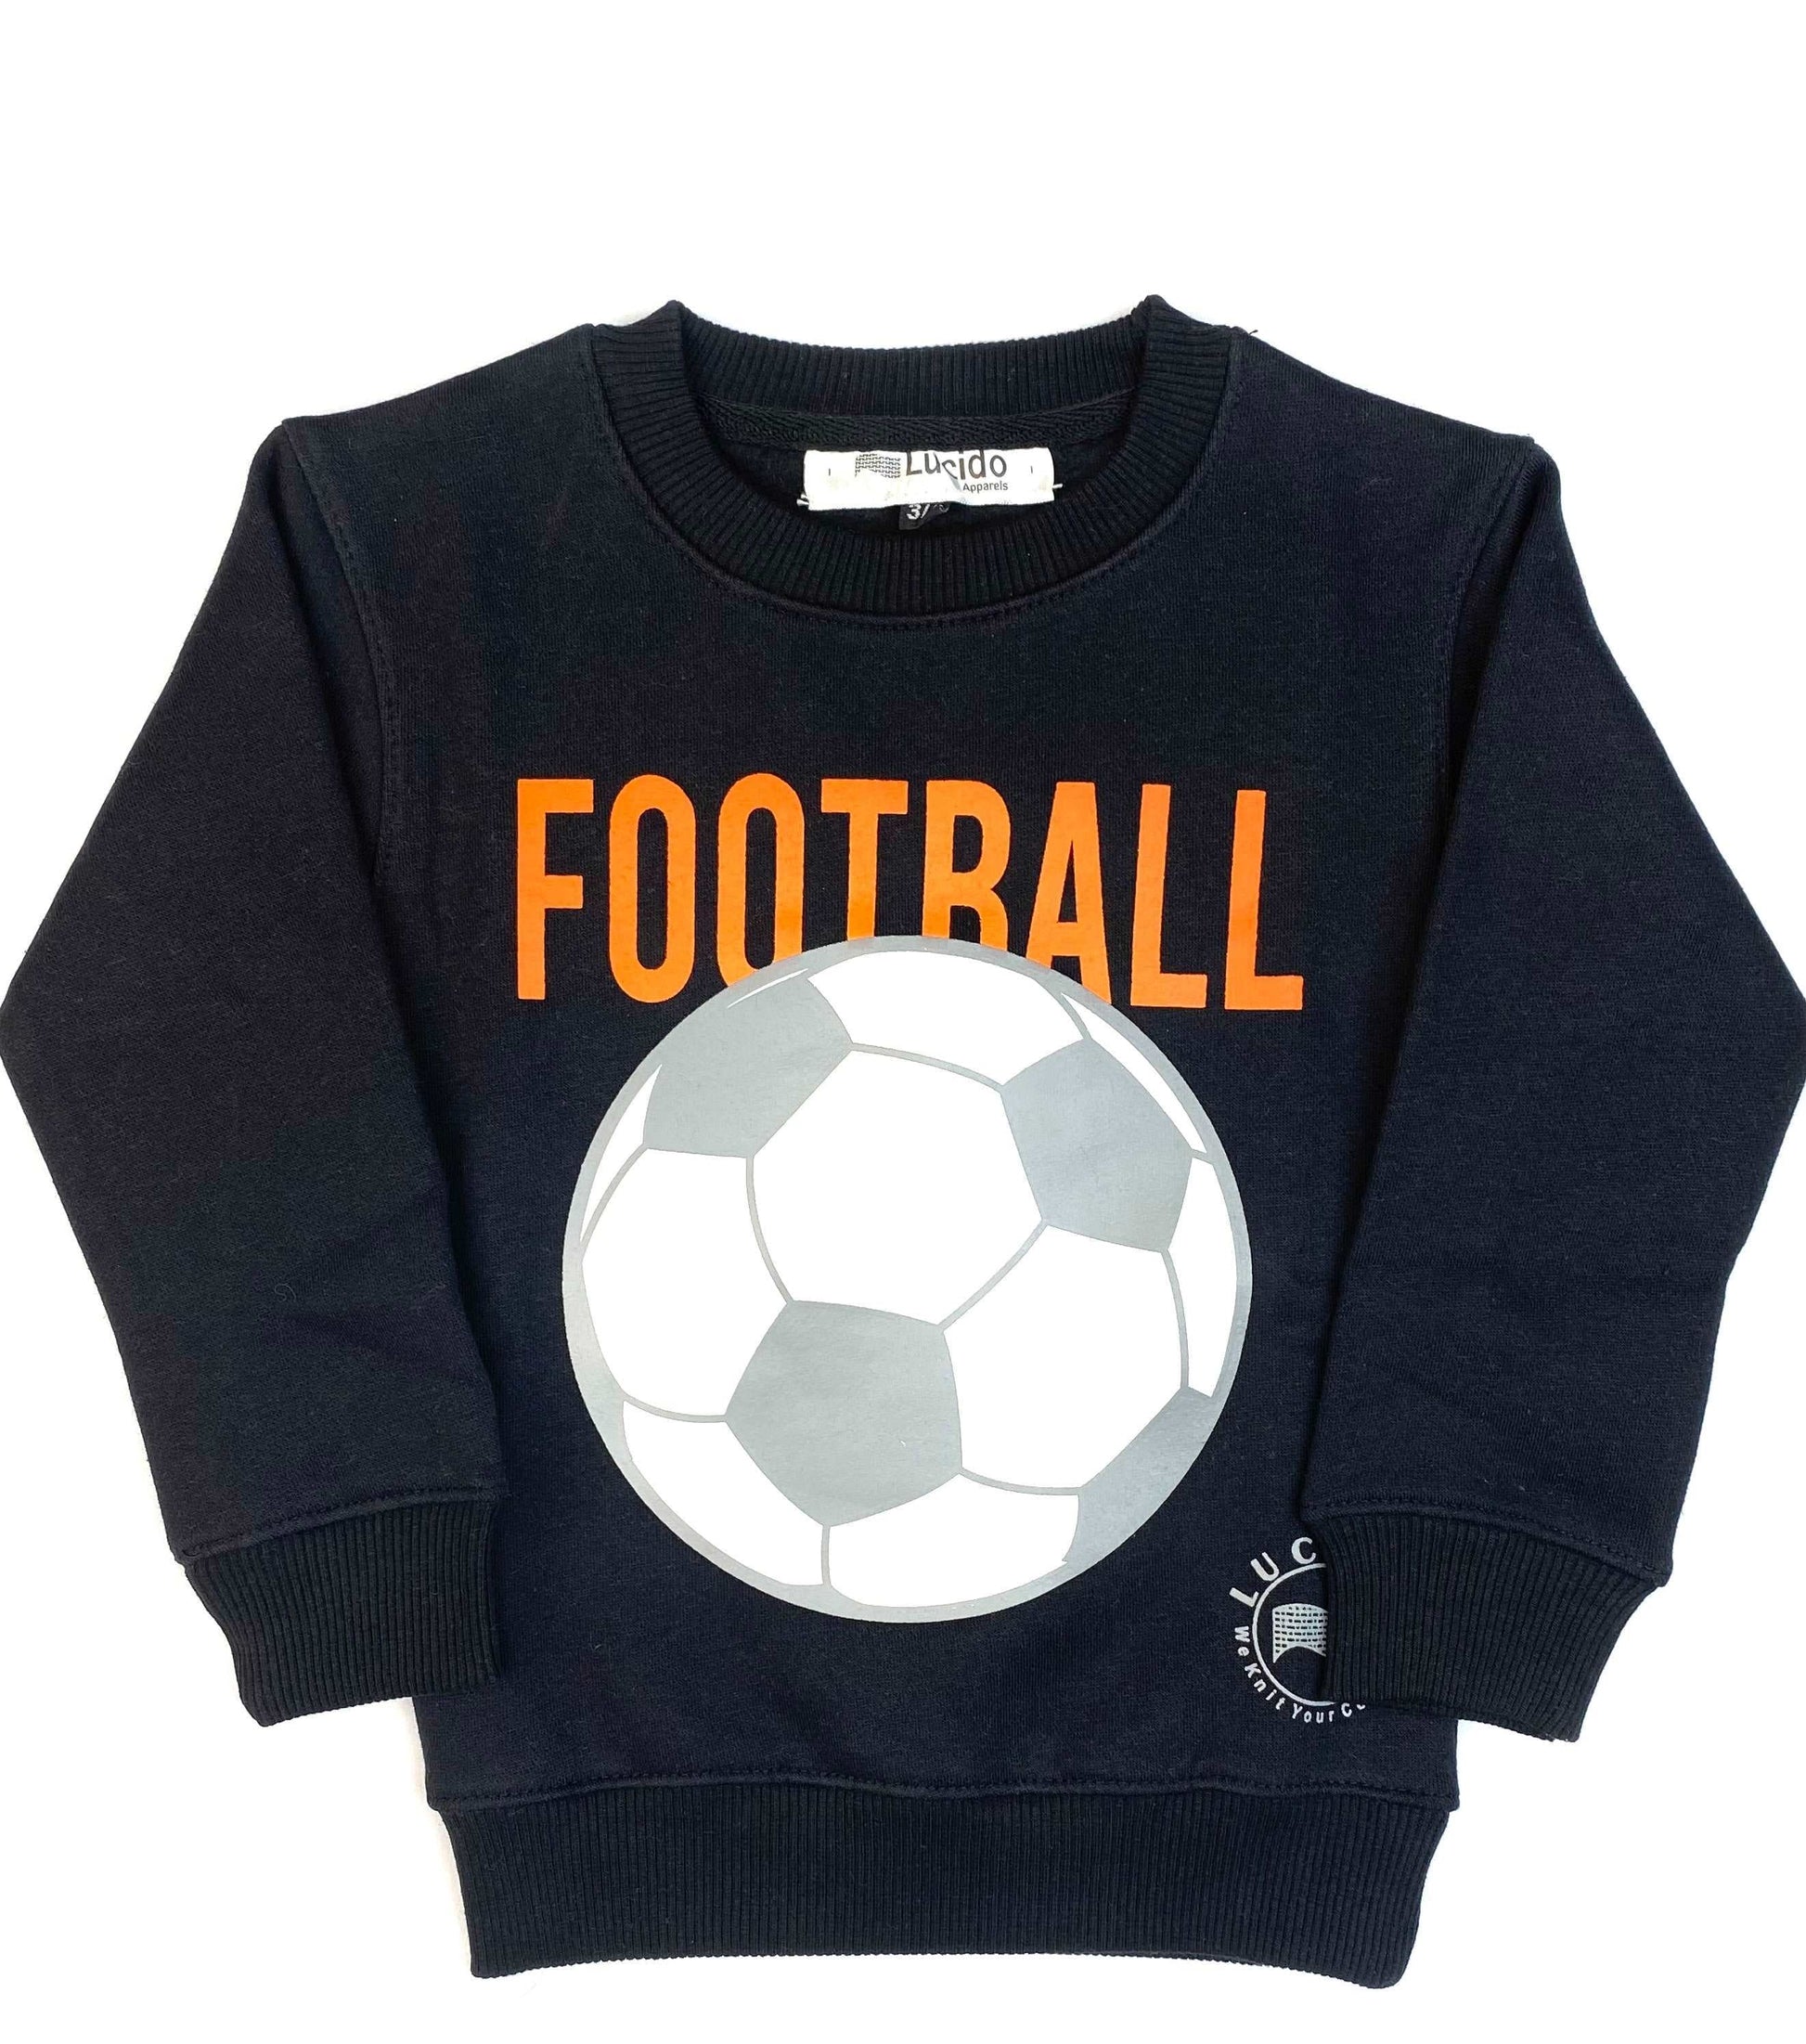 Football Sweatshirt Kids